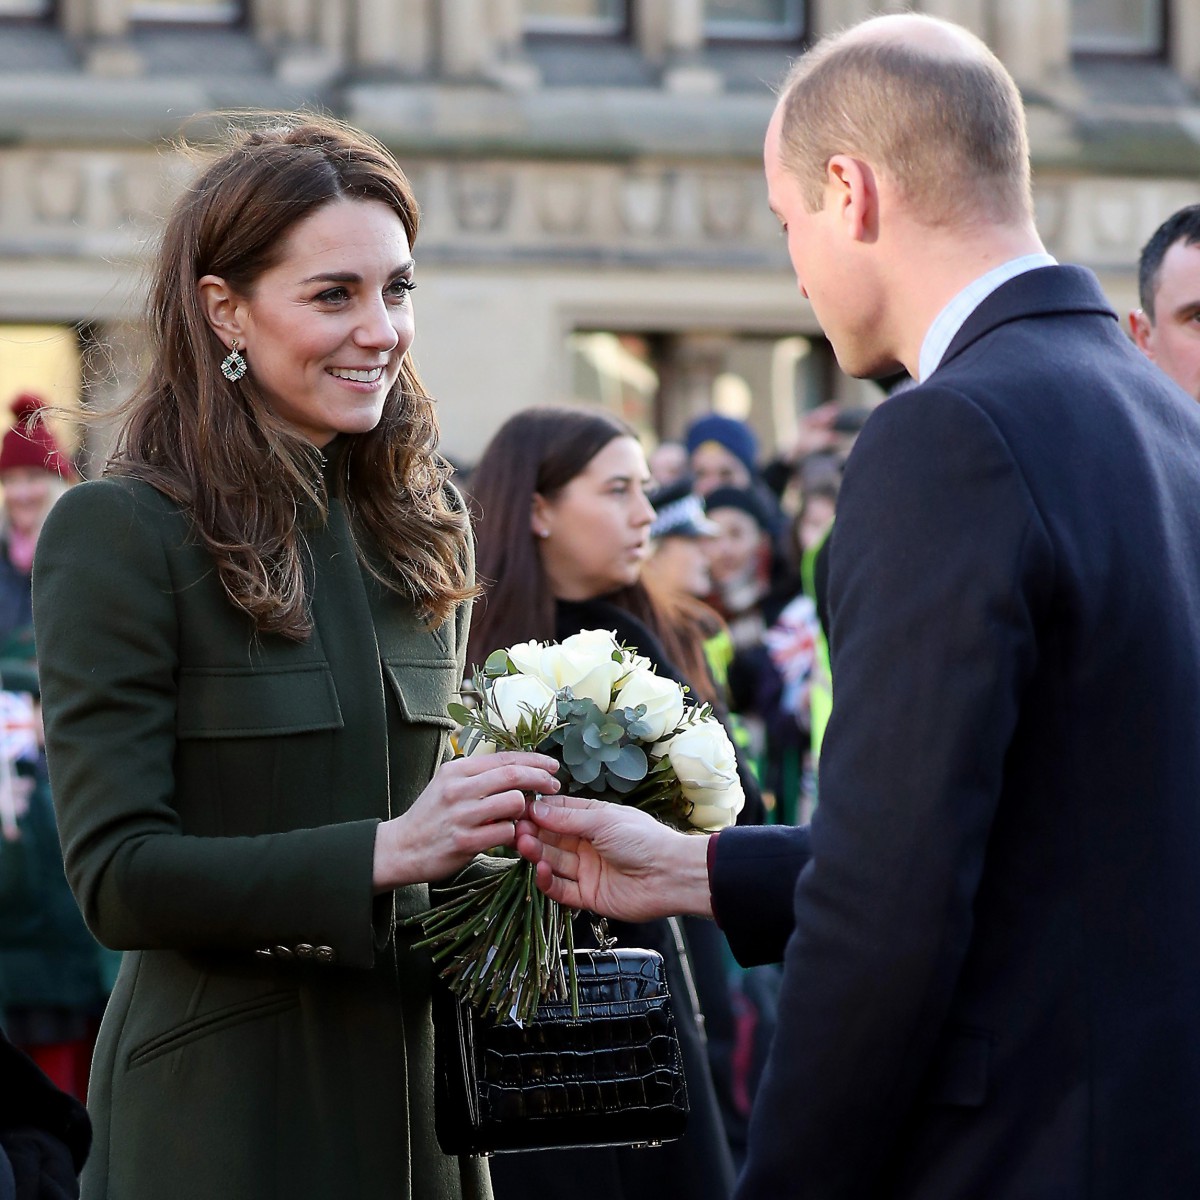 Prince William handing Kate Middleton a white rose